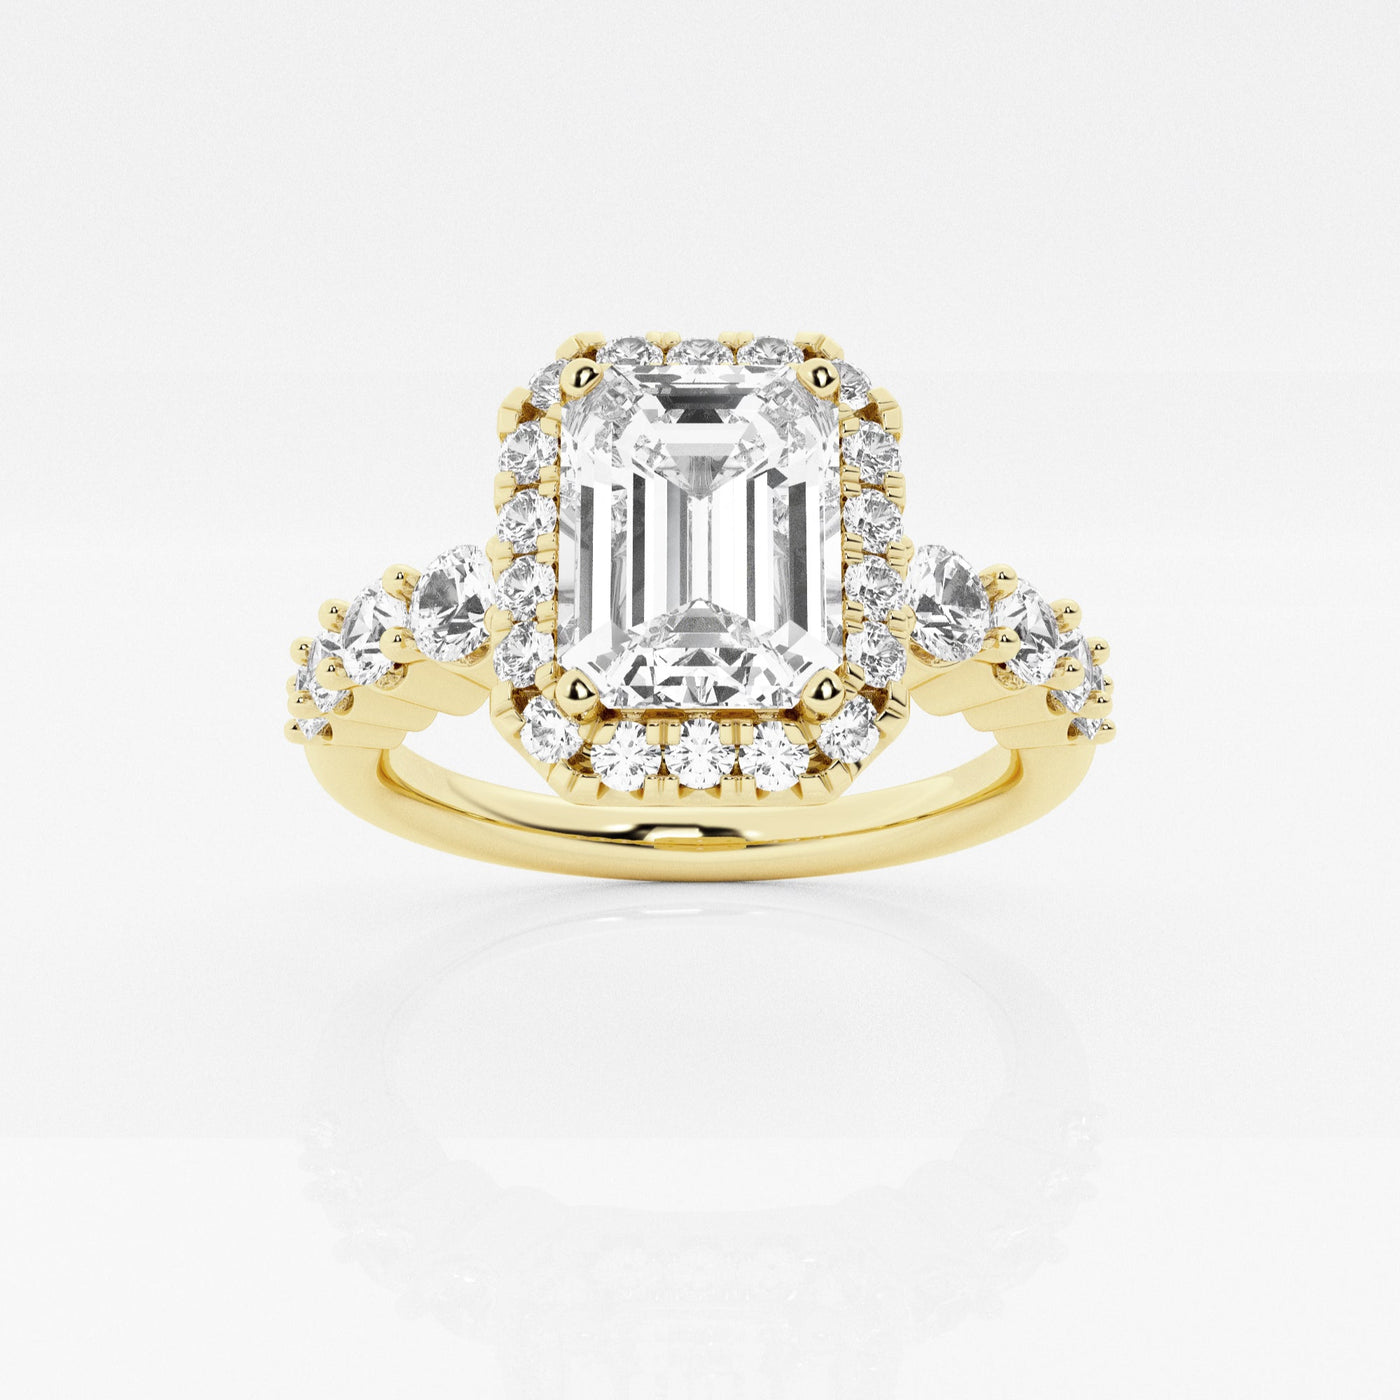 _main_image@SKU:LGR0641X3E100H1GY4~#carat_1.71#diamond-quality_fg,-vs2+#metal_18k-yellow-gold